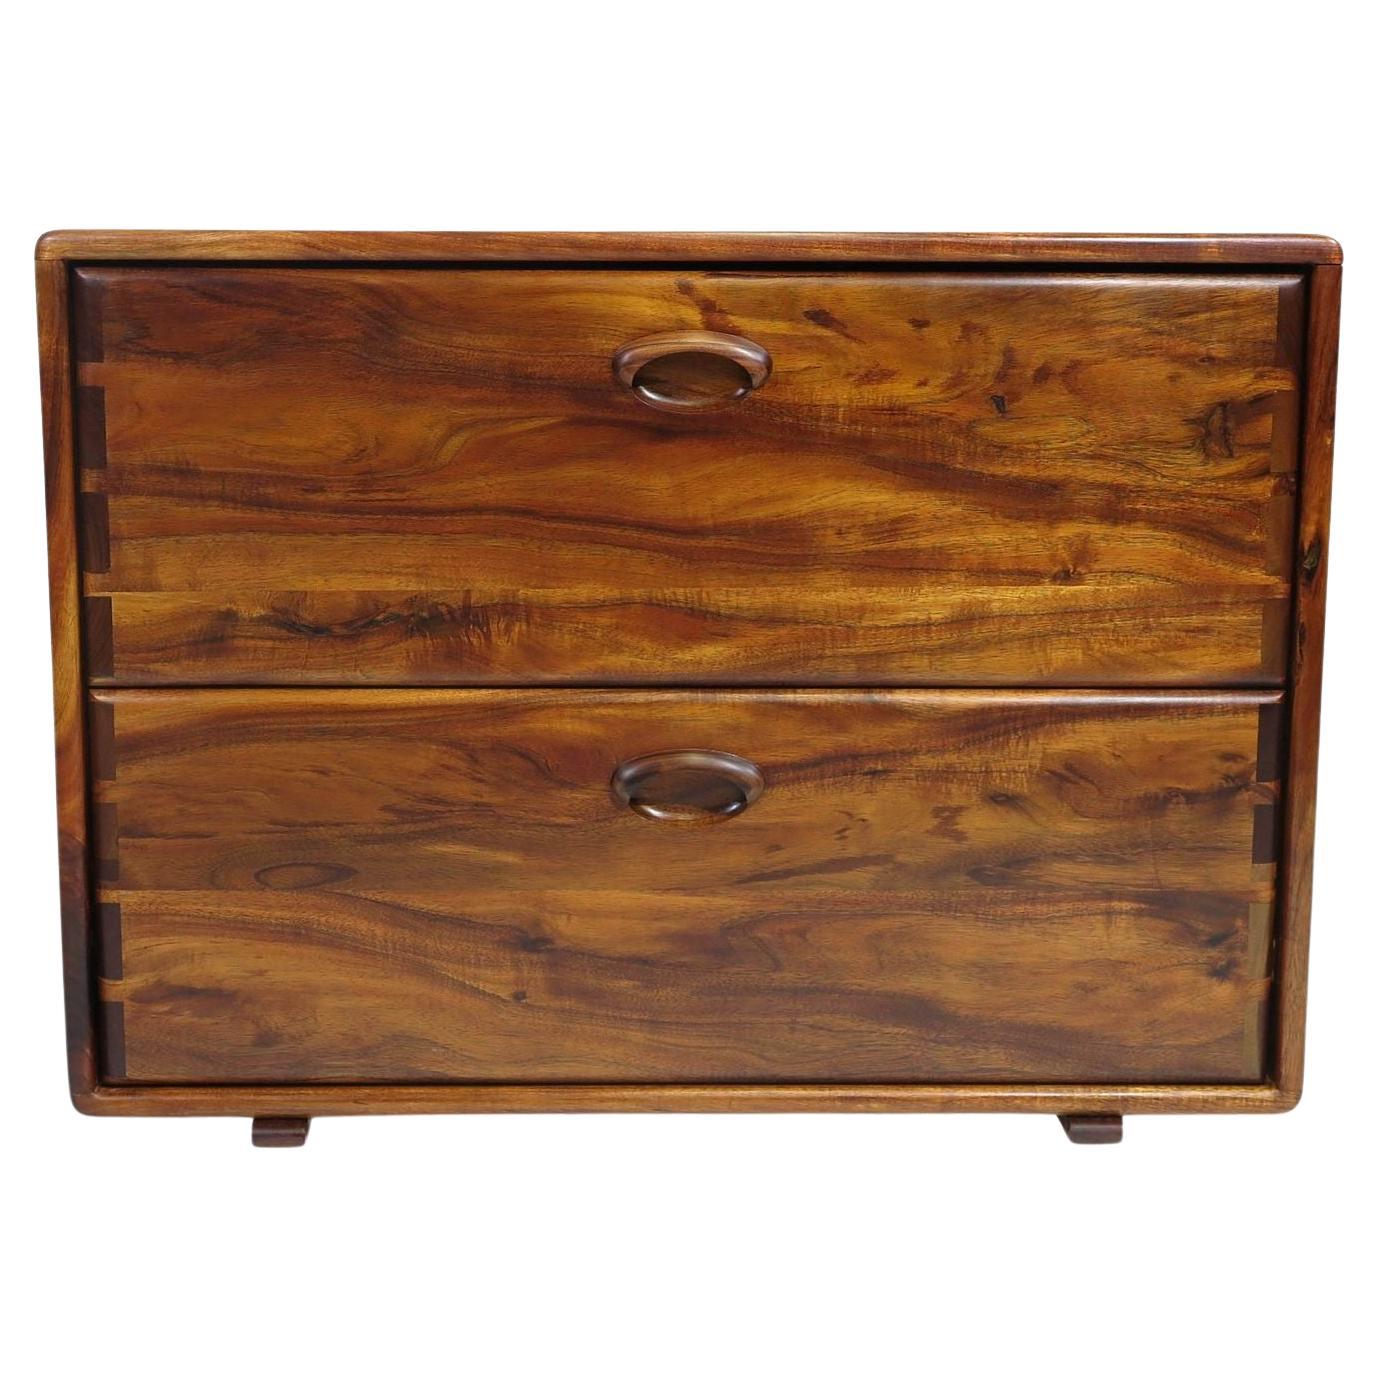 Koa California Studio Craft Filing Cabinet #1 For Sale